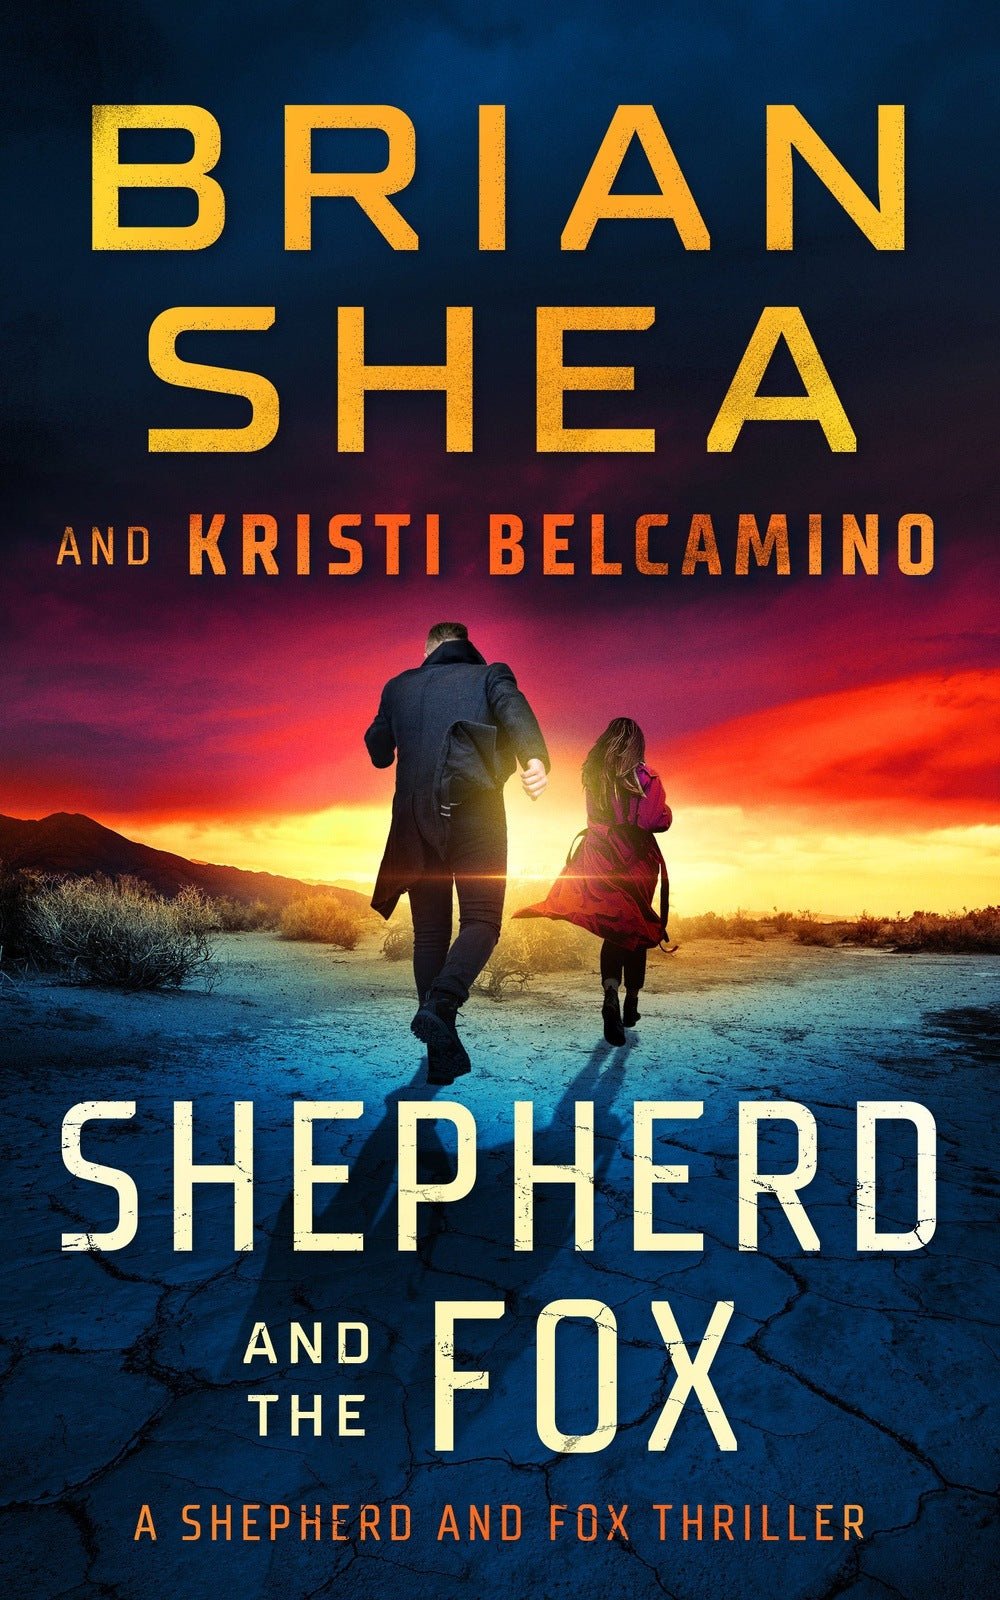 Shepherd and The Fox - ​Severn River Publishing